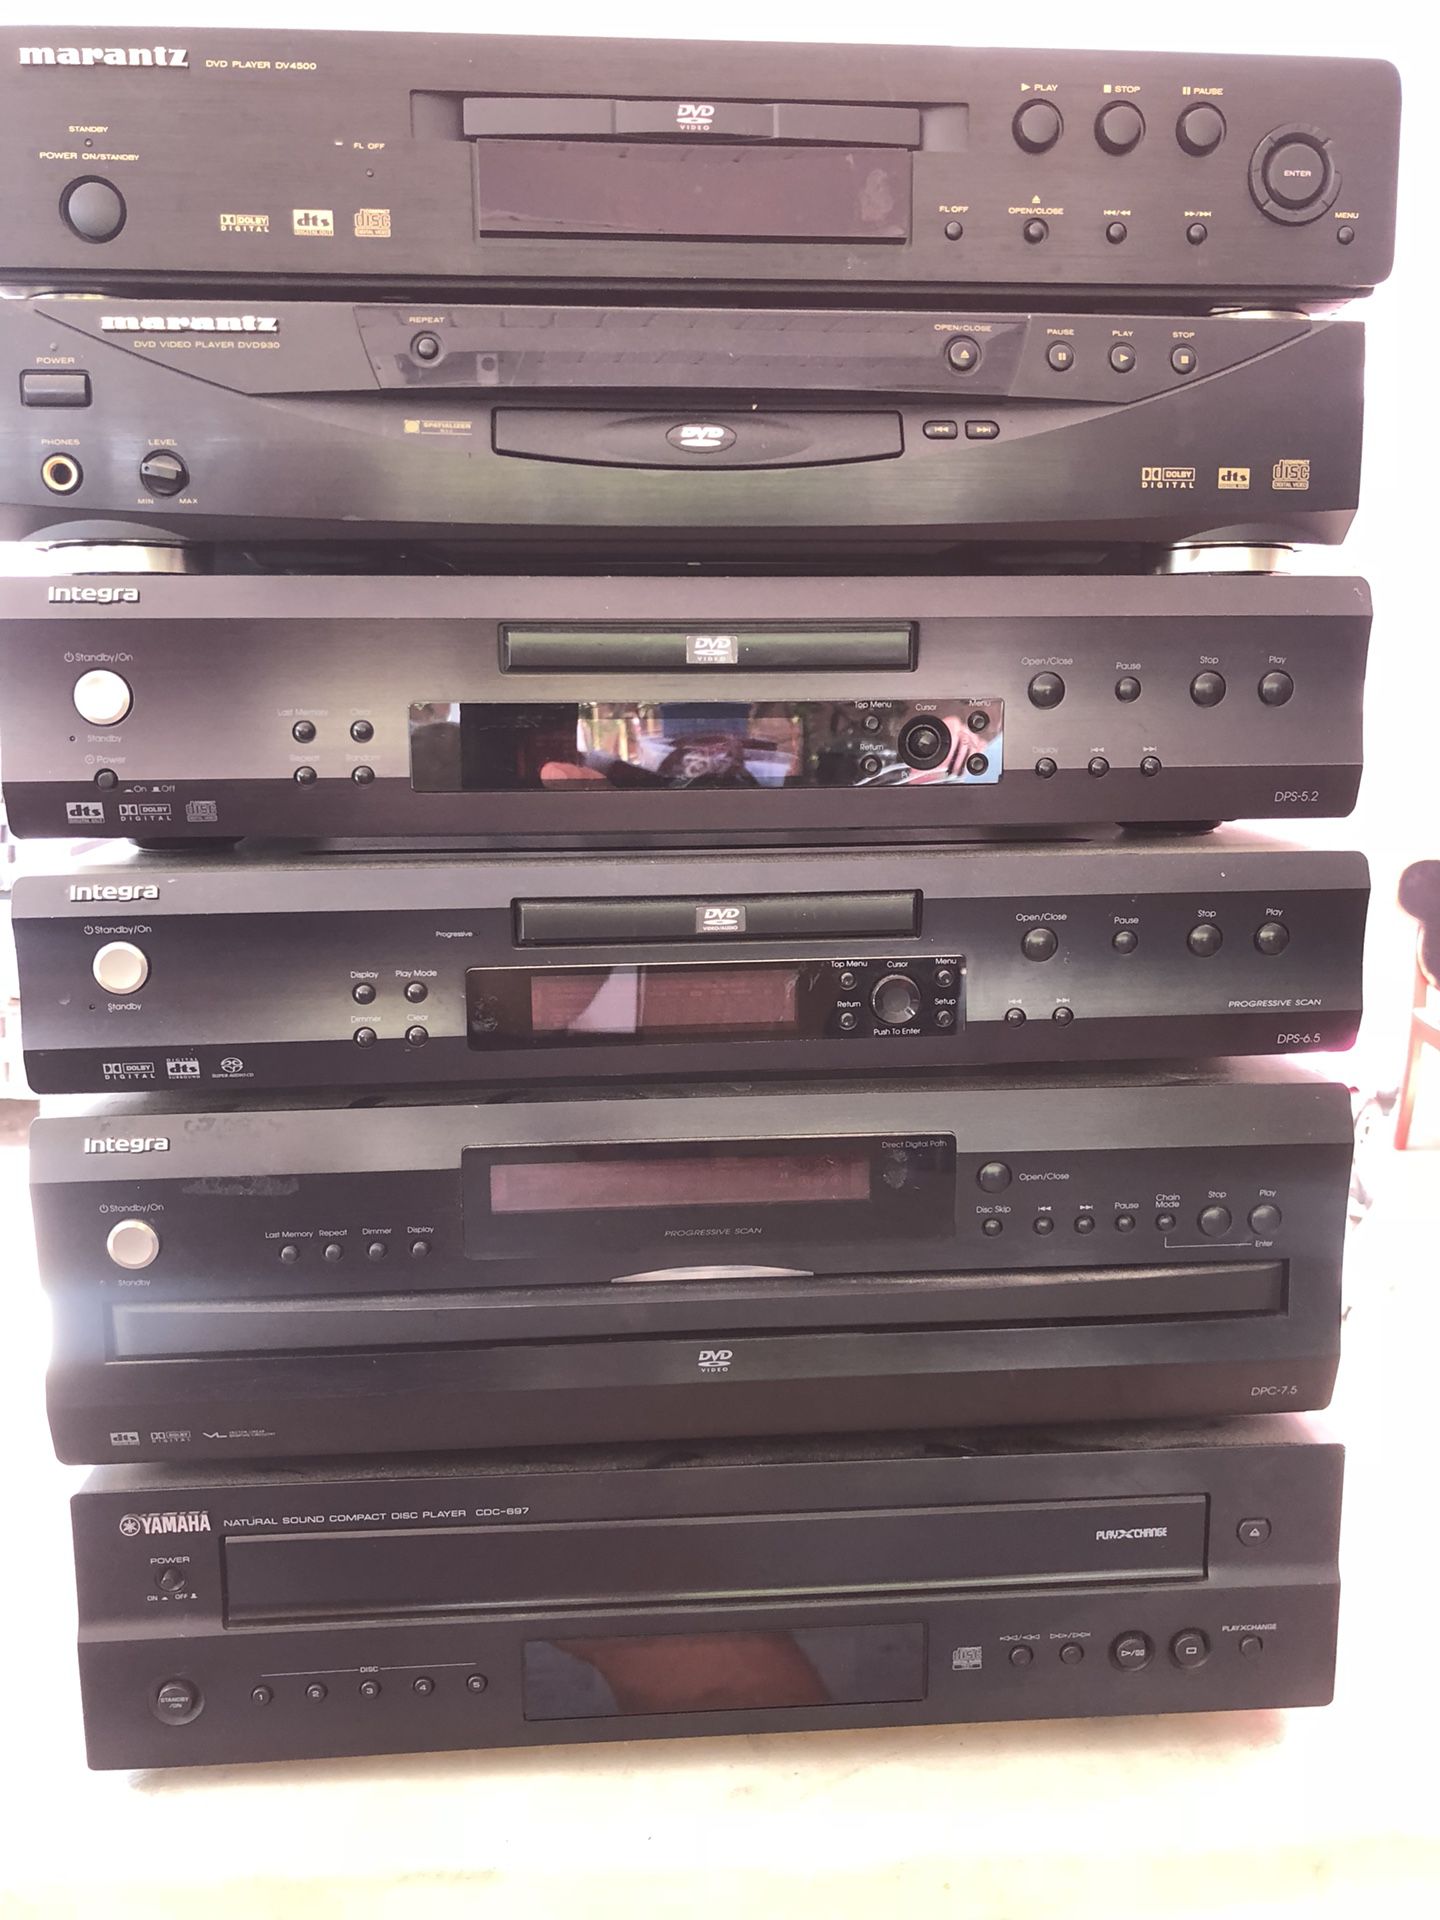 Yamaha Integra Marantz DVD players Single and Multiple Disc Player 10dls each